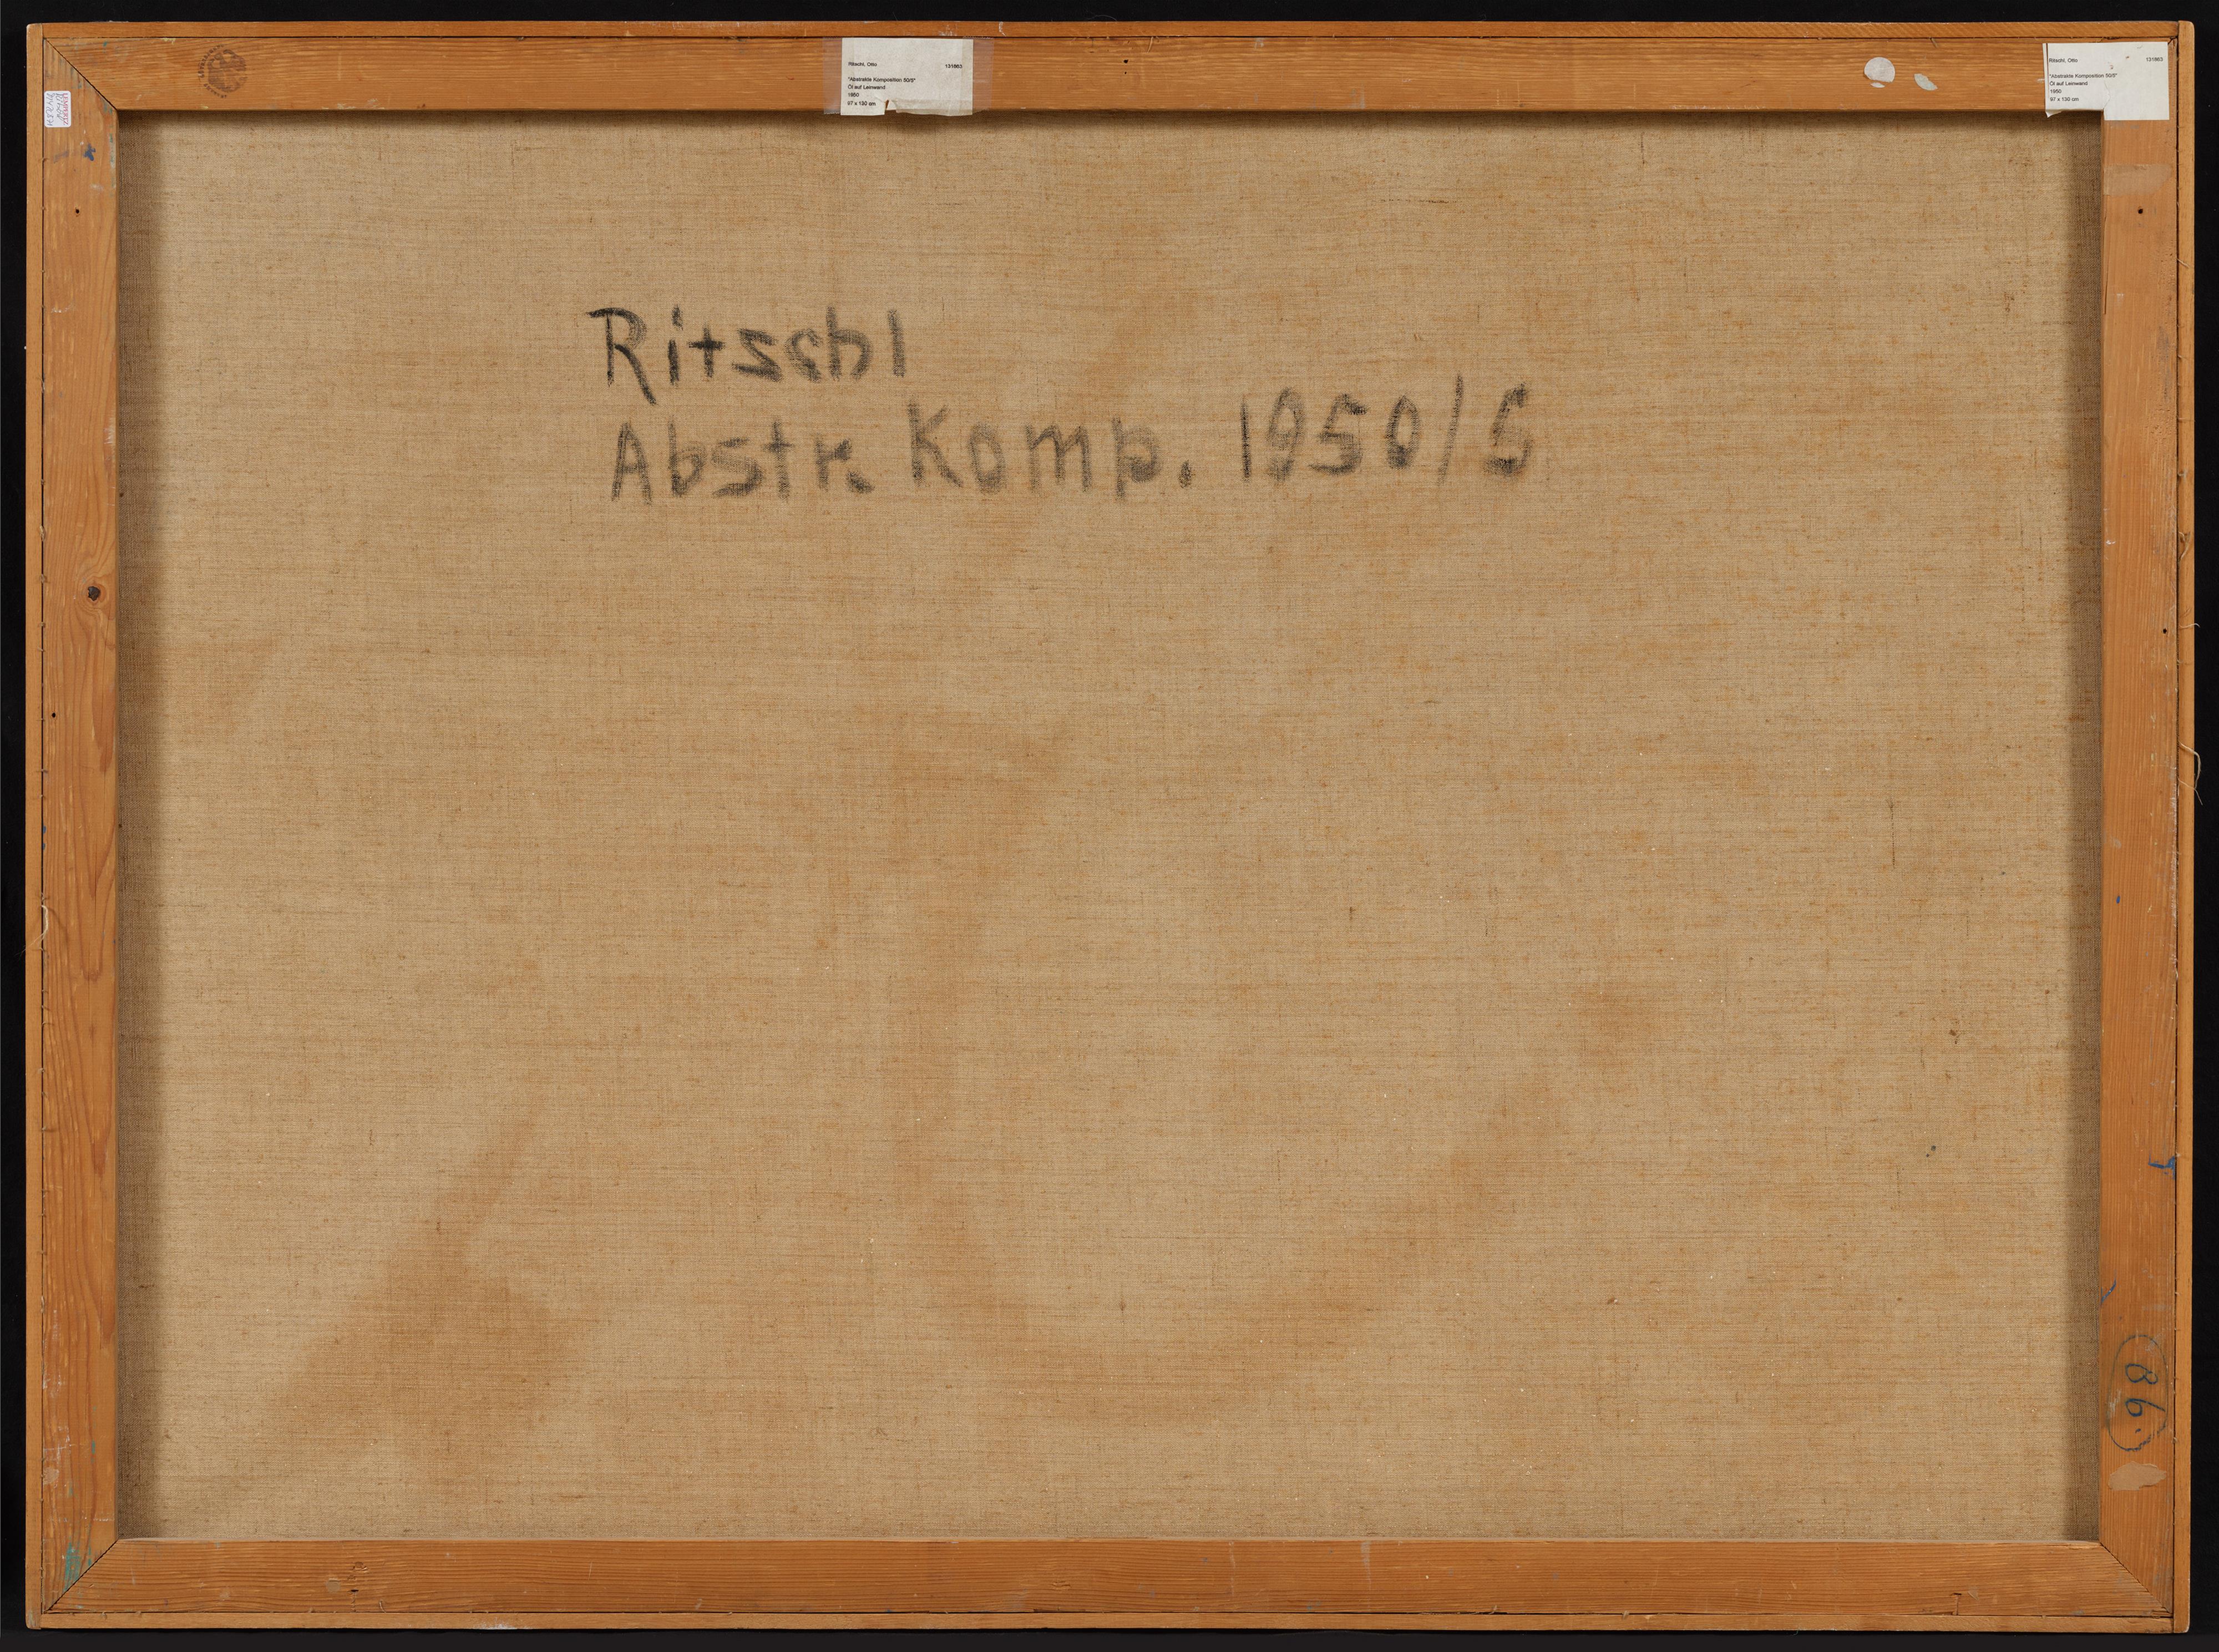 Otto Ritschl - Abstrakte Komposition - image-2